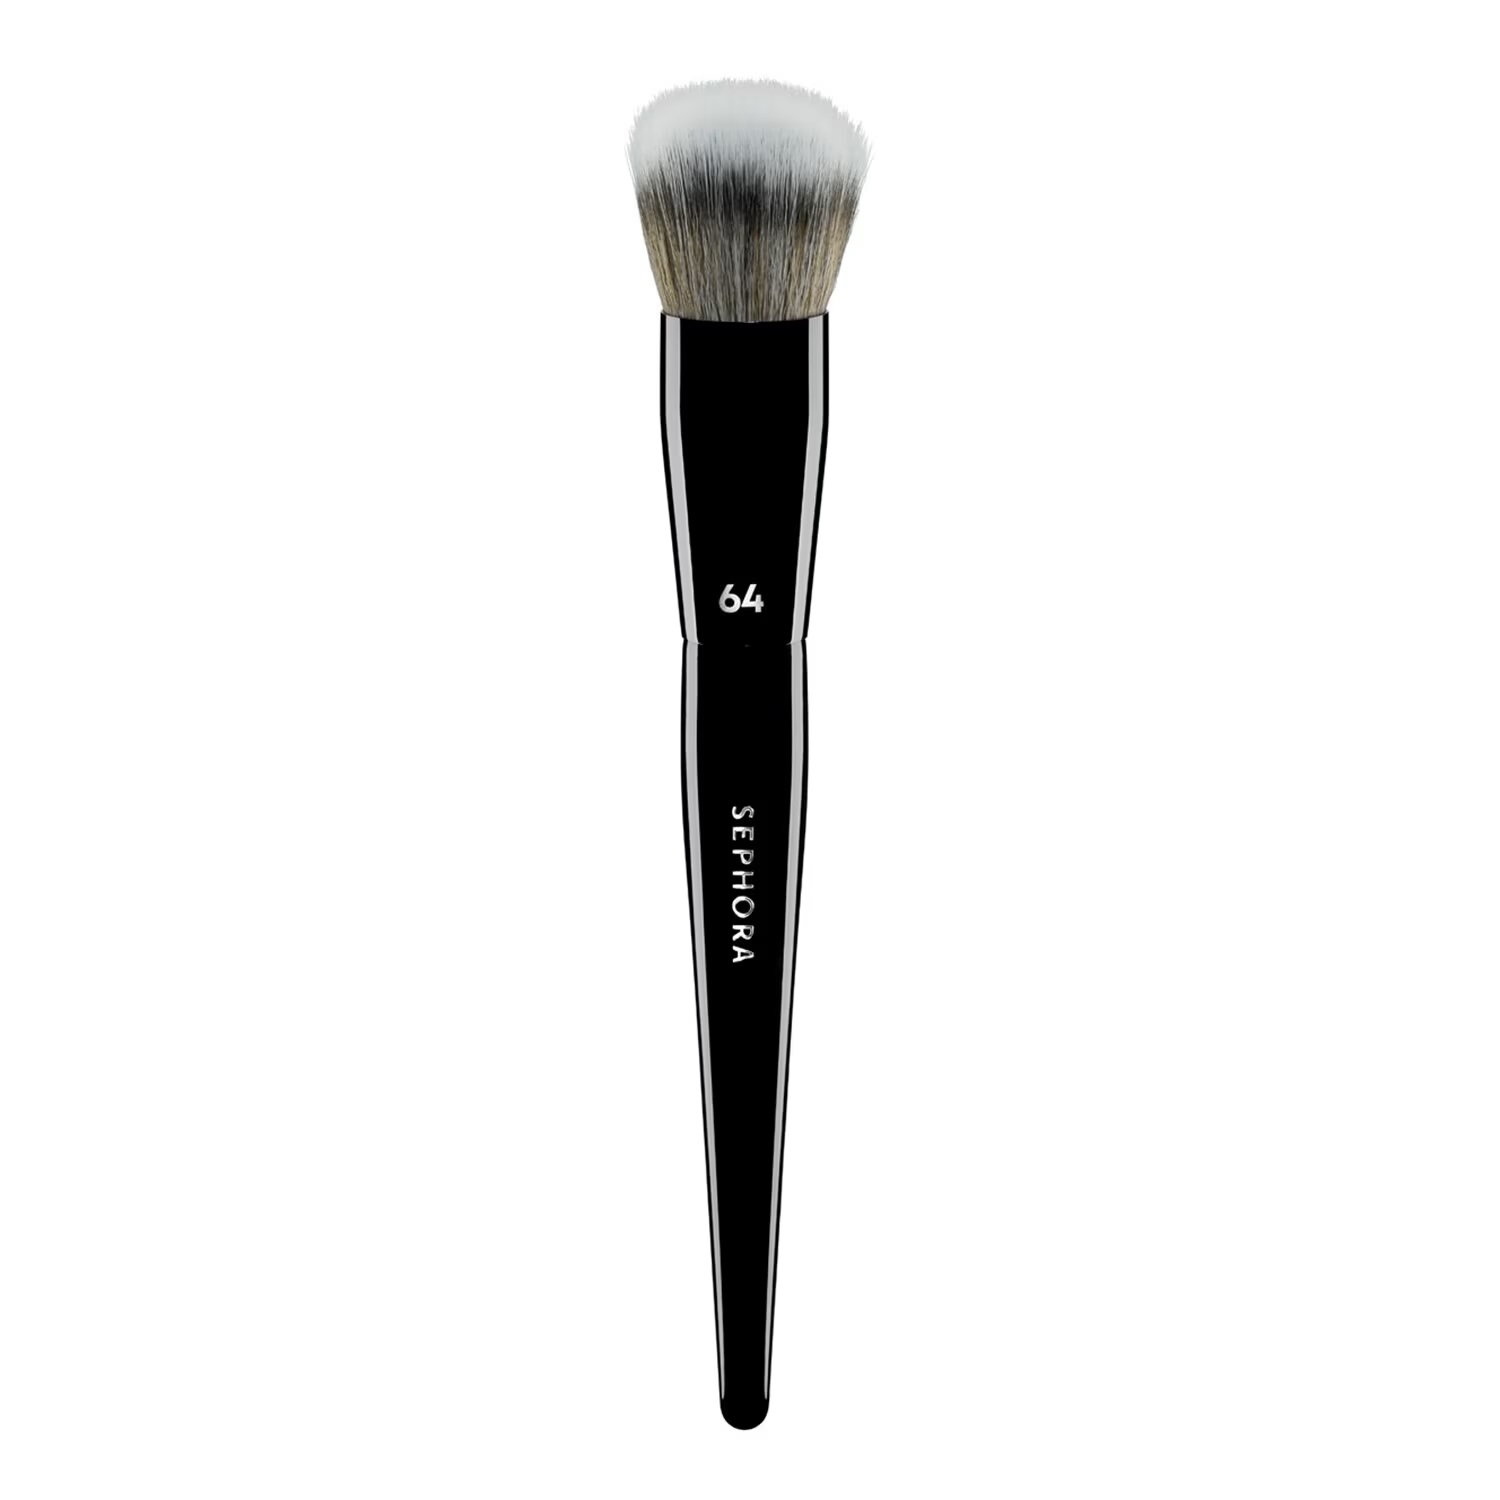 pro foundation brush 64 (brocha para base de maquillaje)